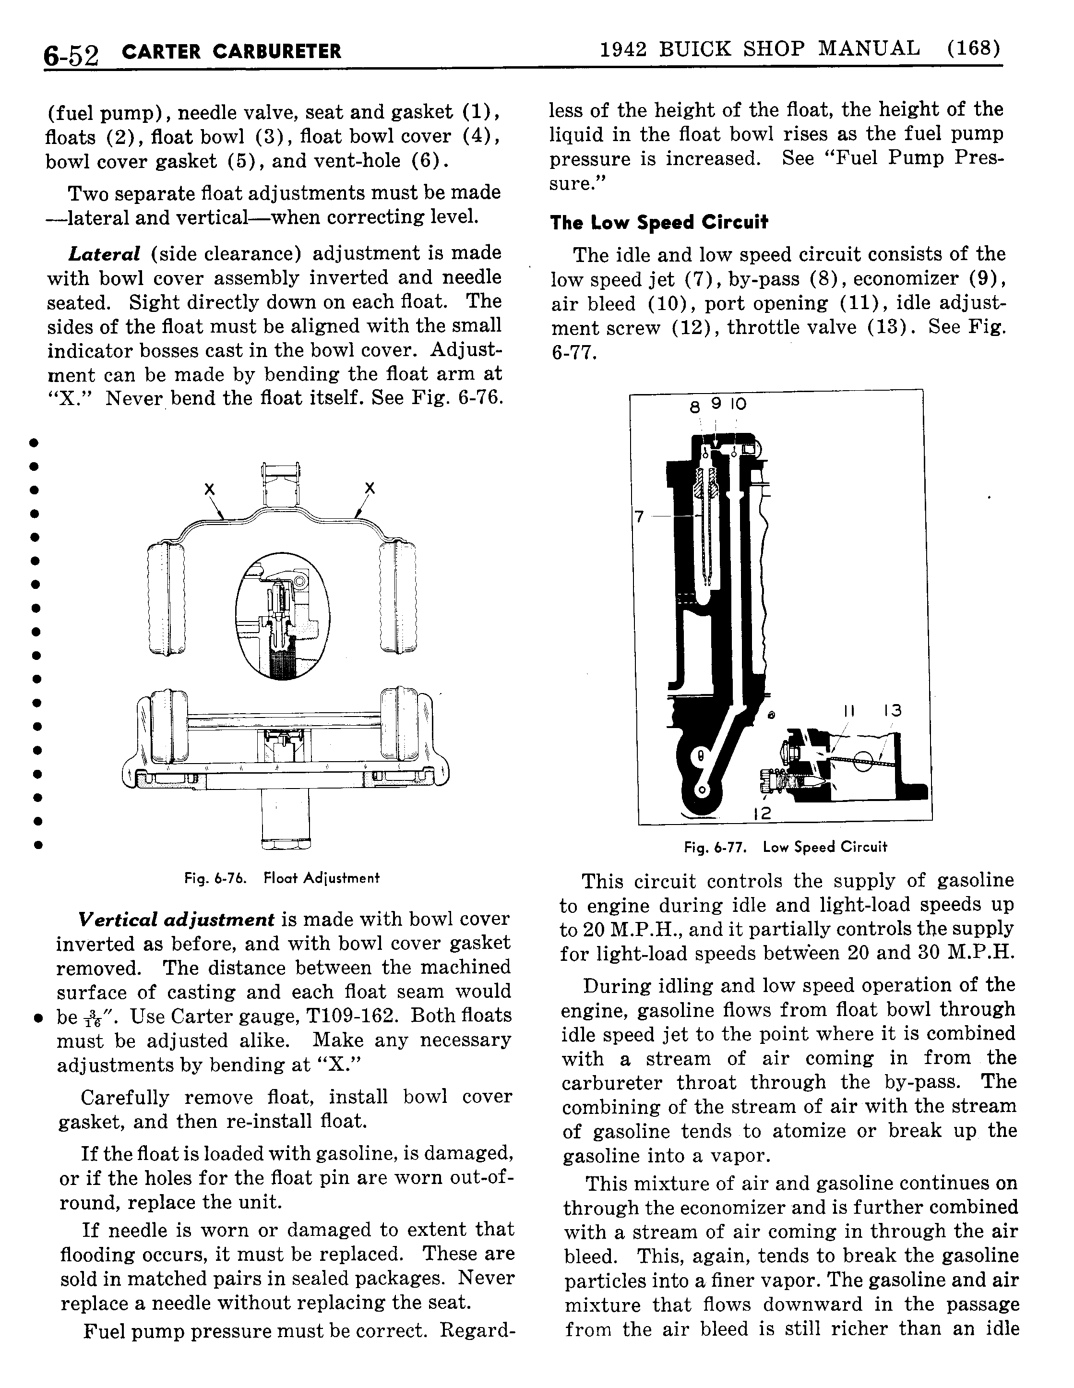 n_07 1942 Buick Shop Manual - Engine-053-053.jpg